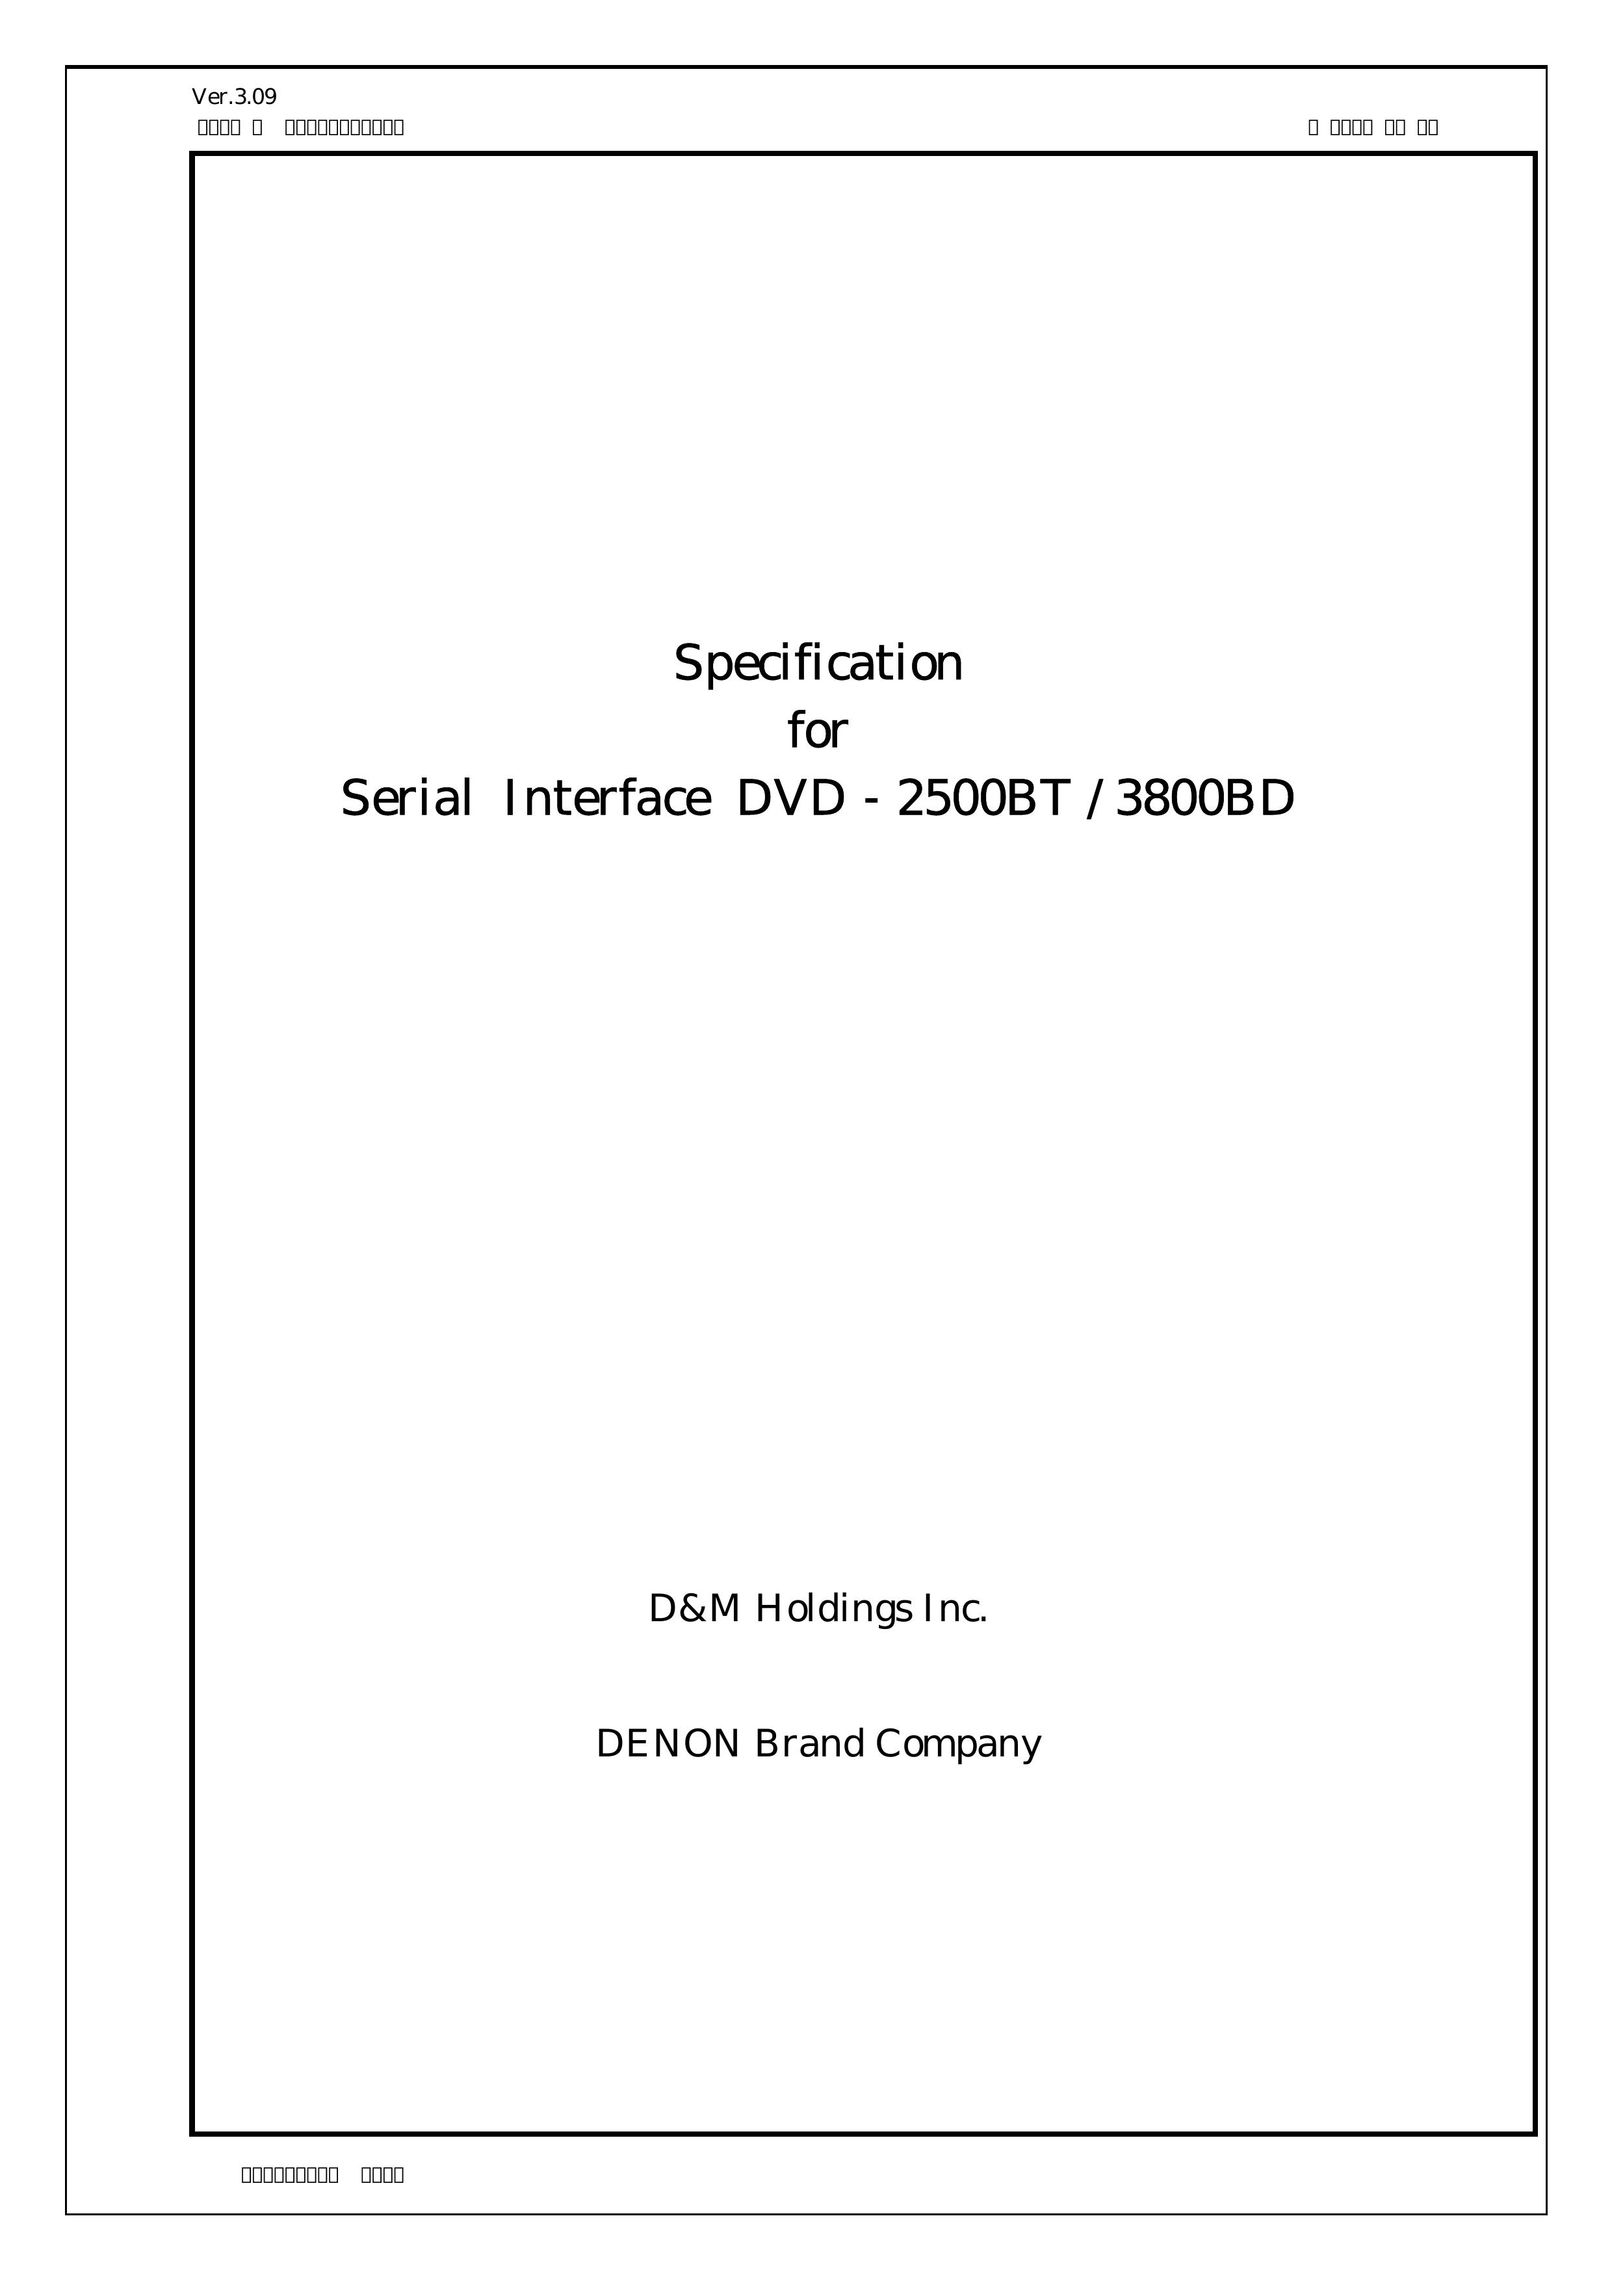 Denon 2500BT DVD Player User Manual